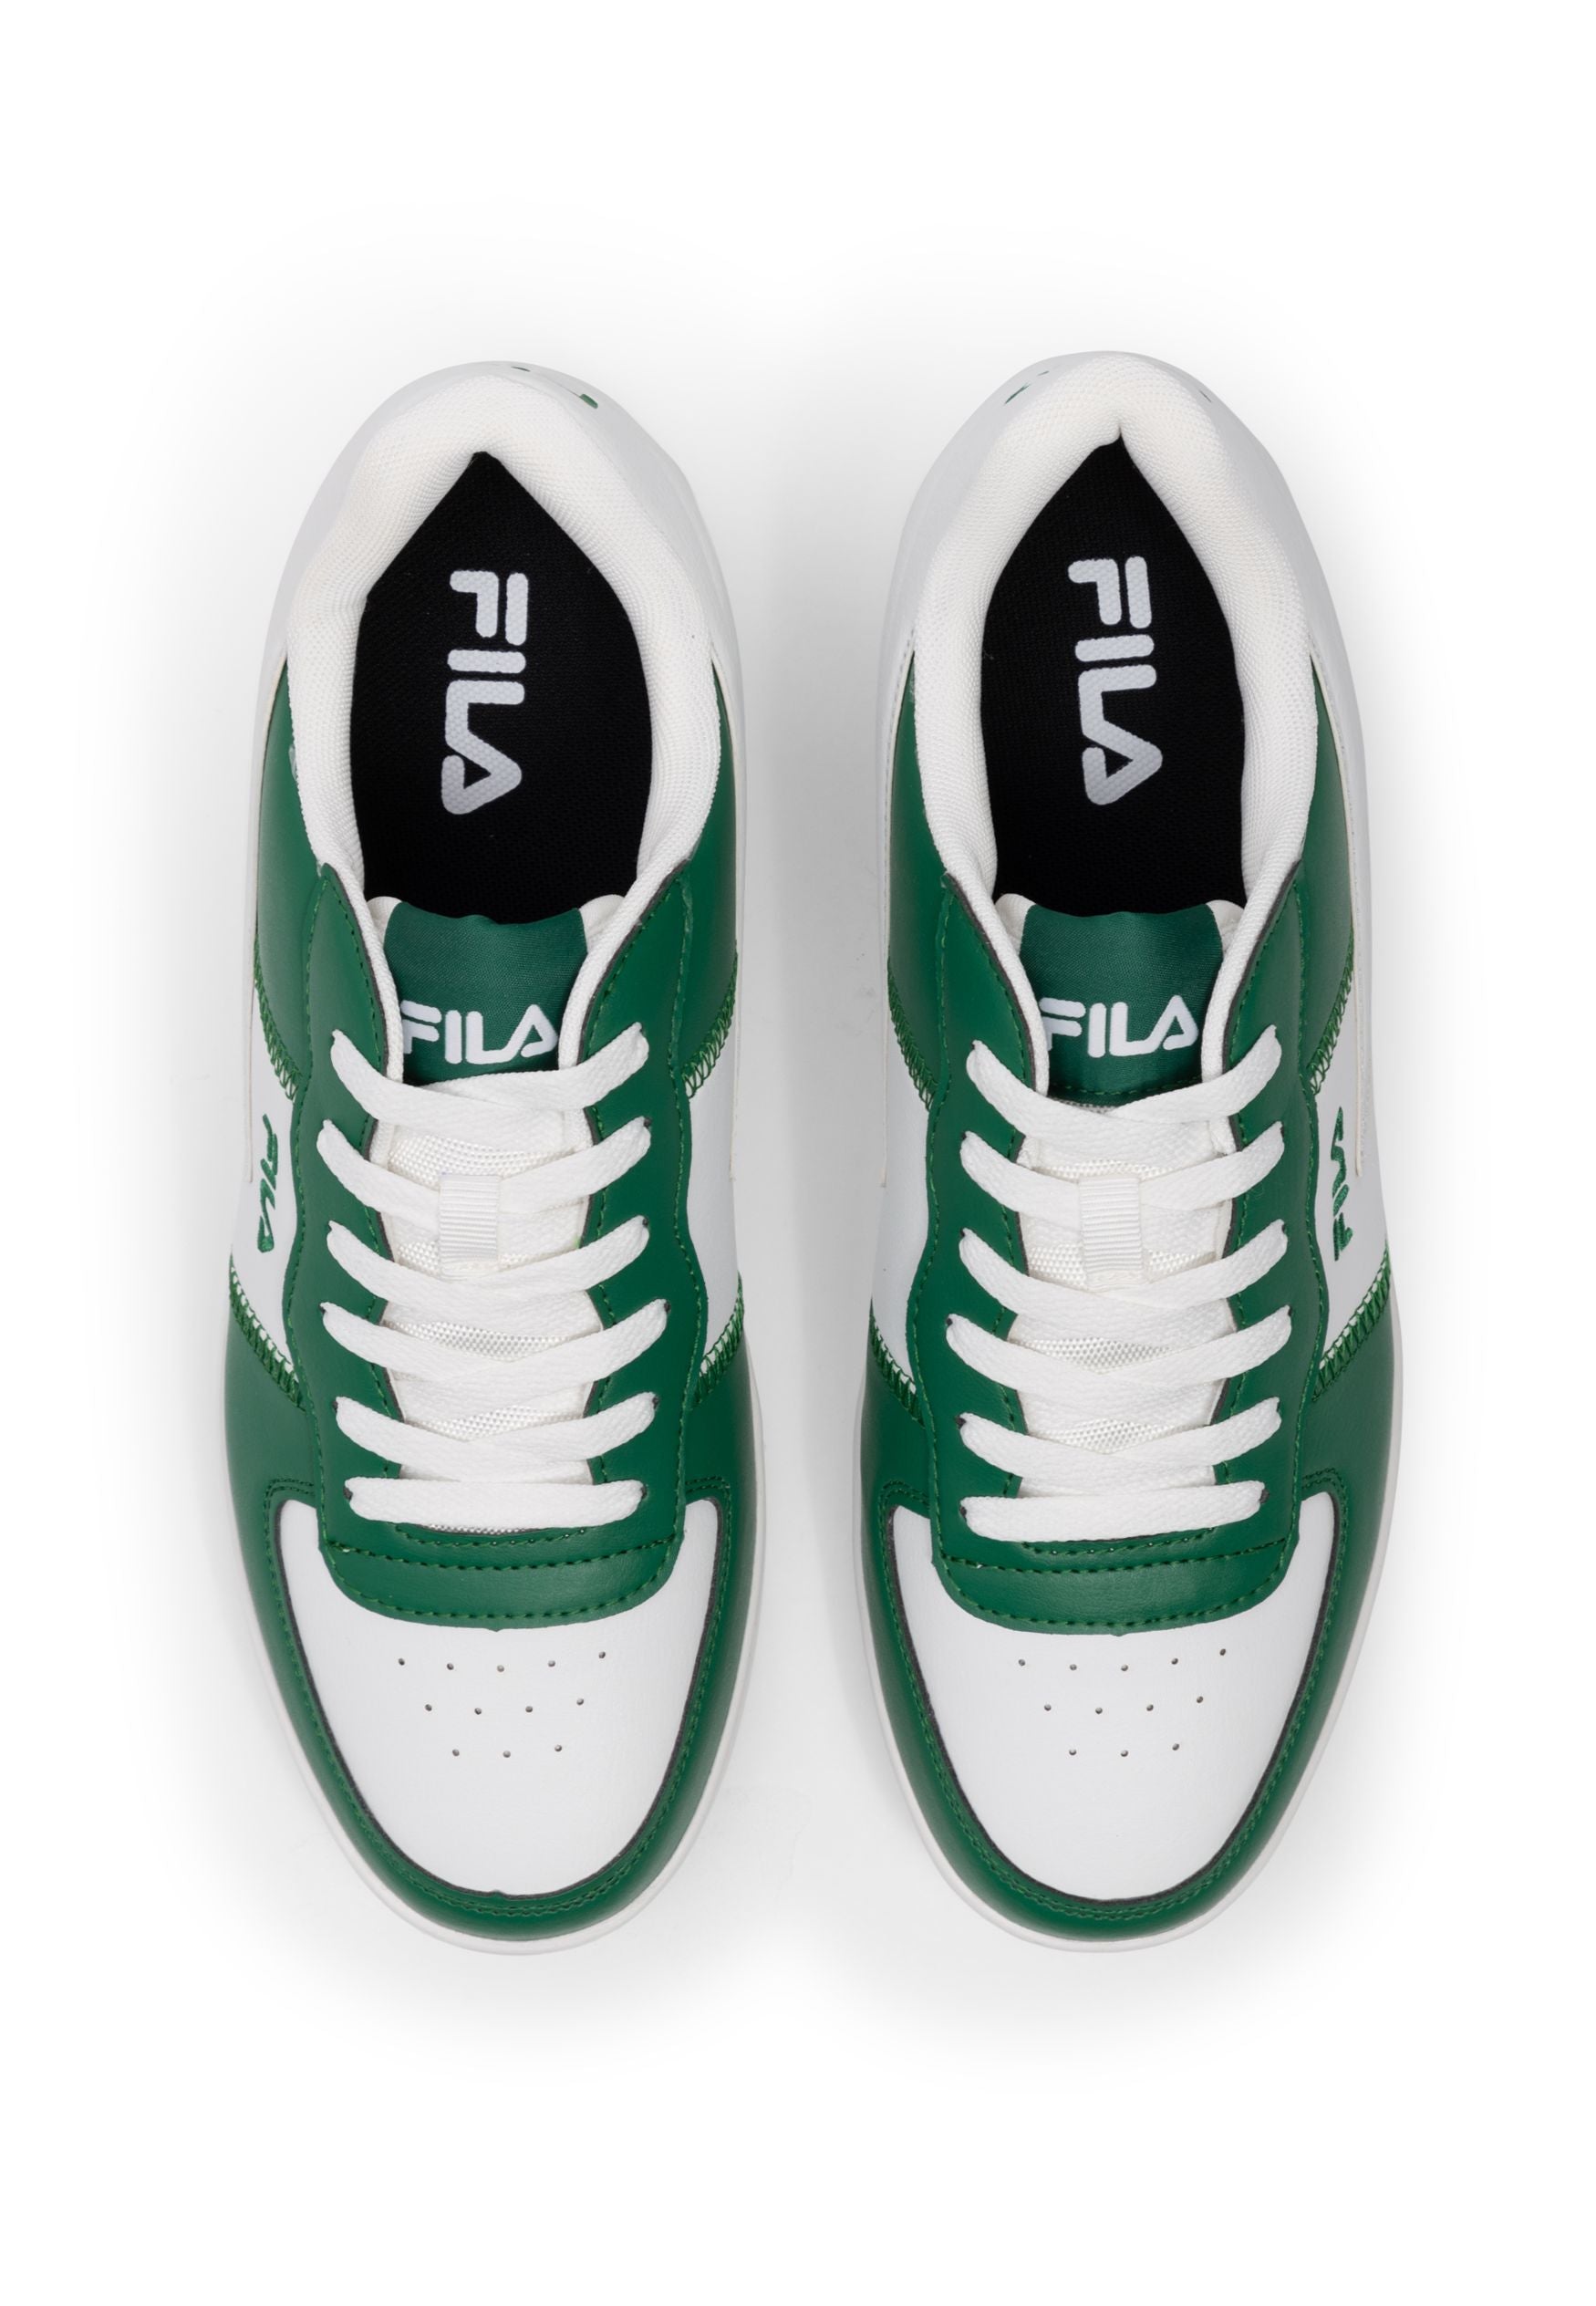 Noclaf in White-Verdant Green Sneakers Fila   